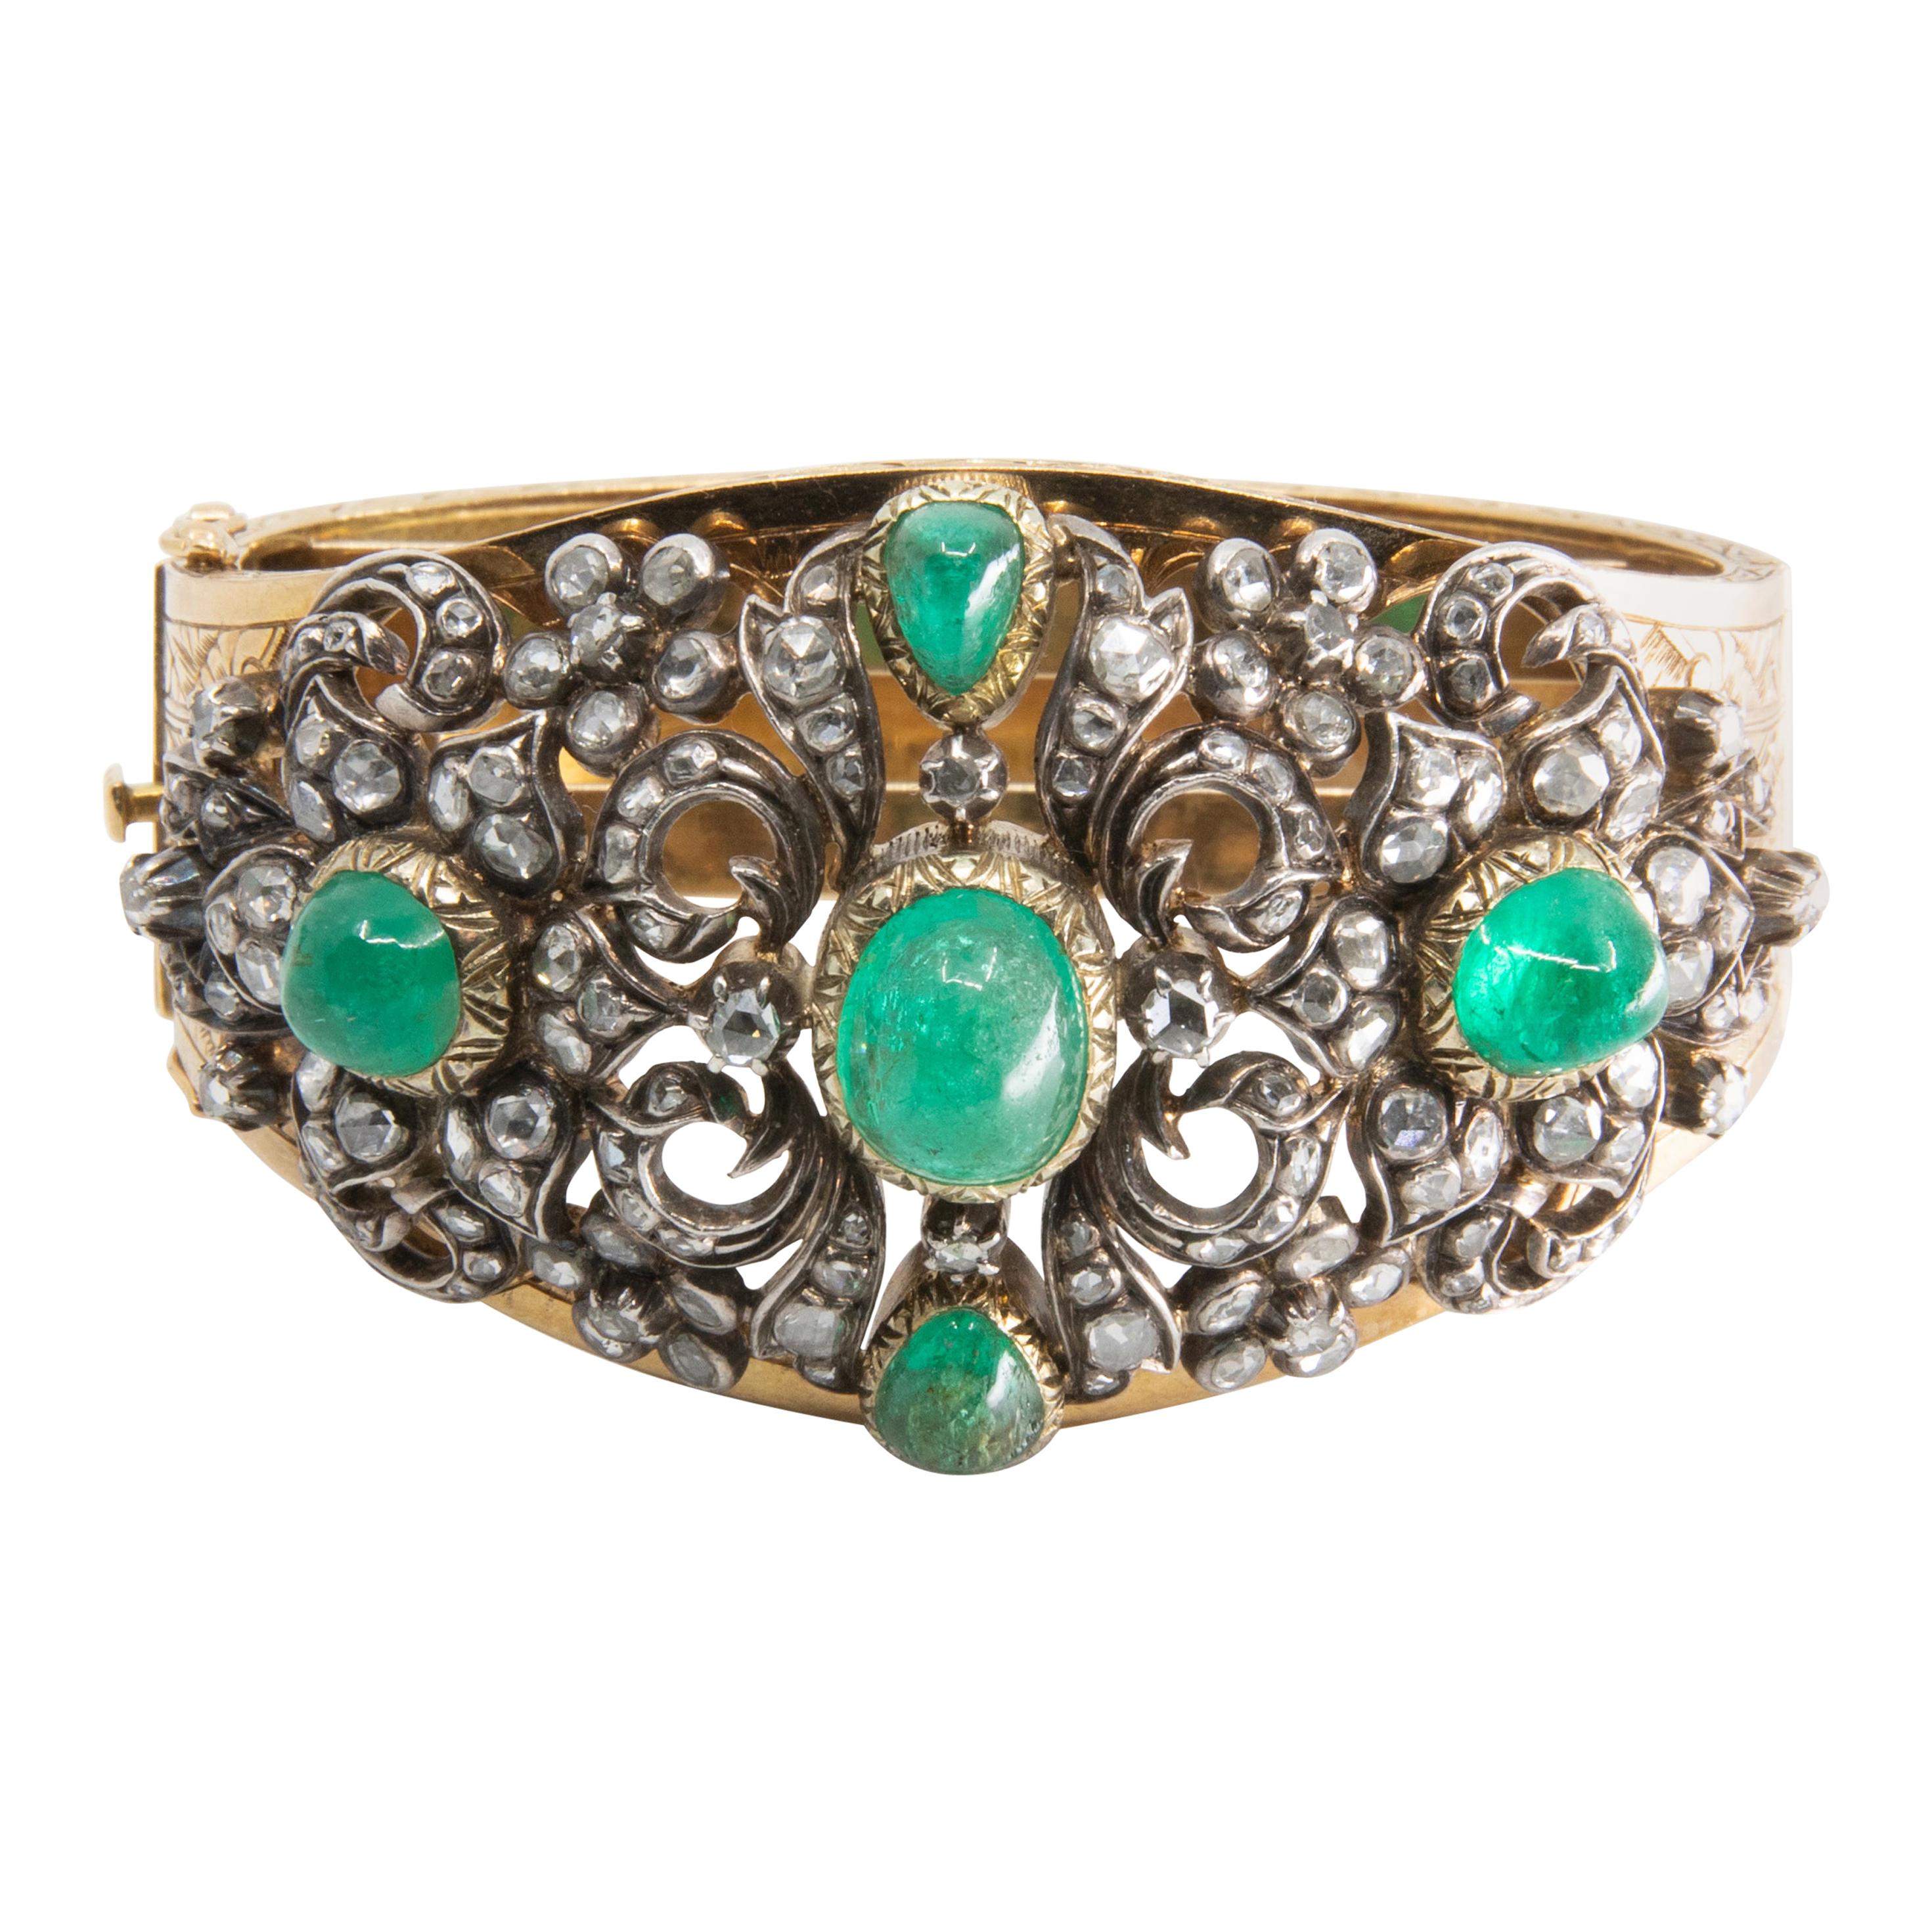 Mid-19th Century Gold, Emerald, and Diamond Bracelet